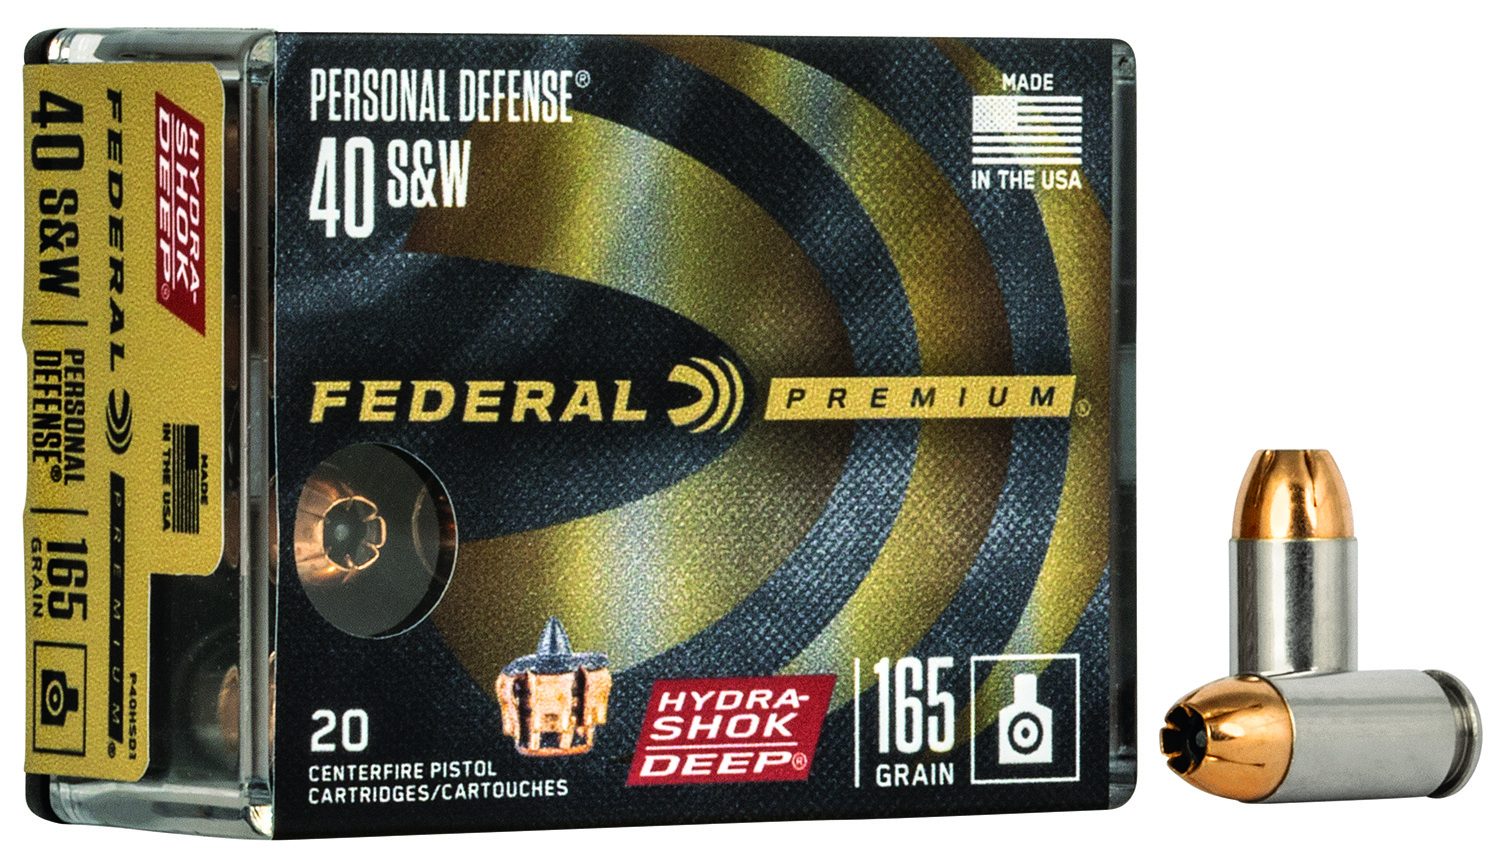 Federal P40HSD1 Premium Personal Defense 40 S&W 165 gr Hydra-Shok Deep Hollow Point 20 Bx/ 10 Cs